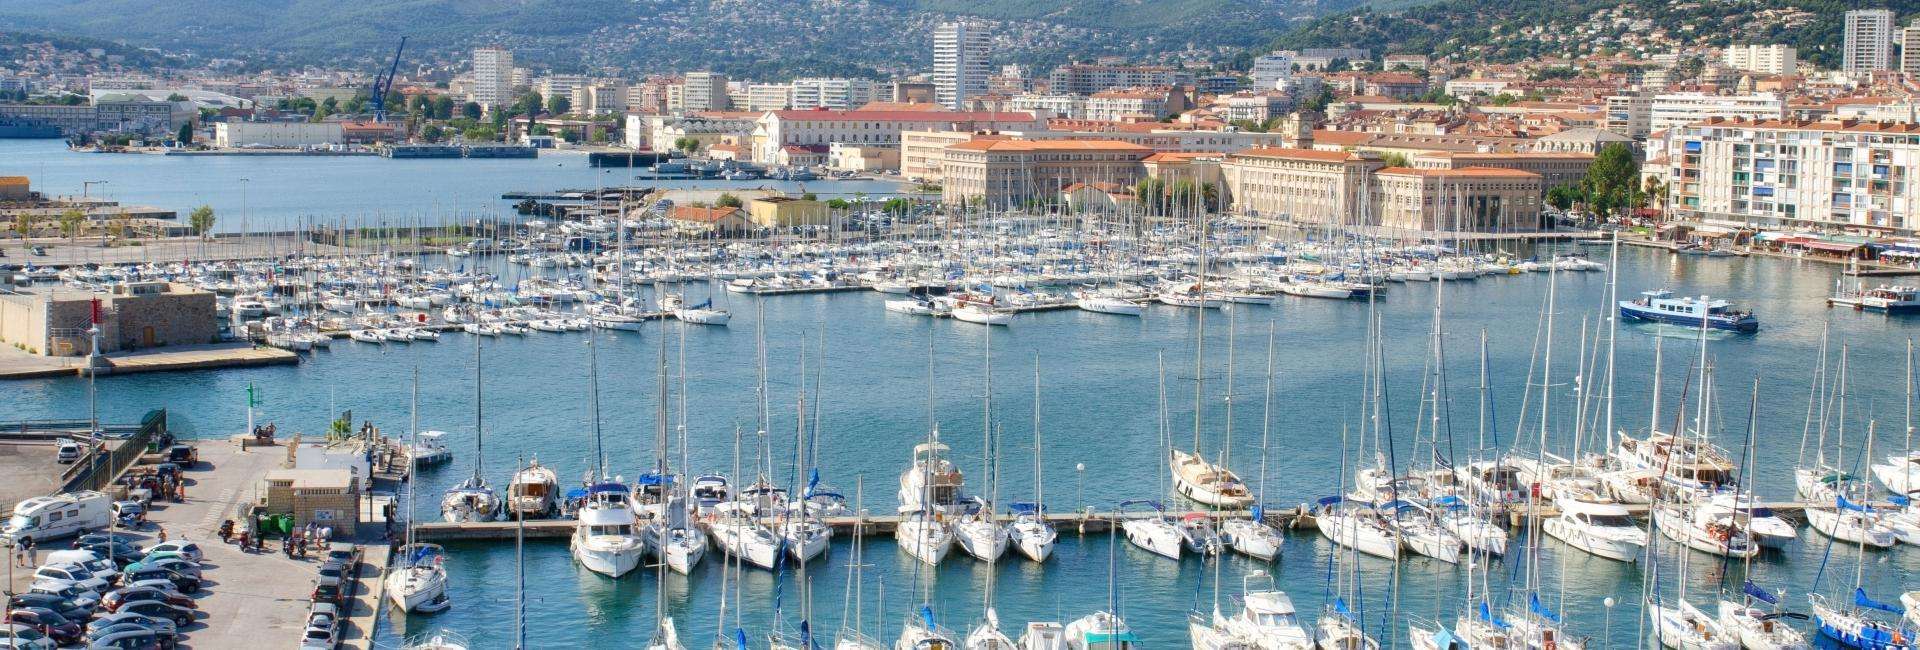 Port de Toulon Vieille Darse